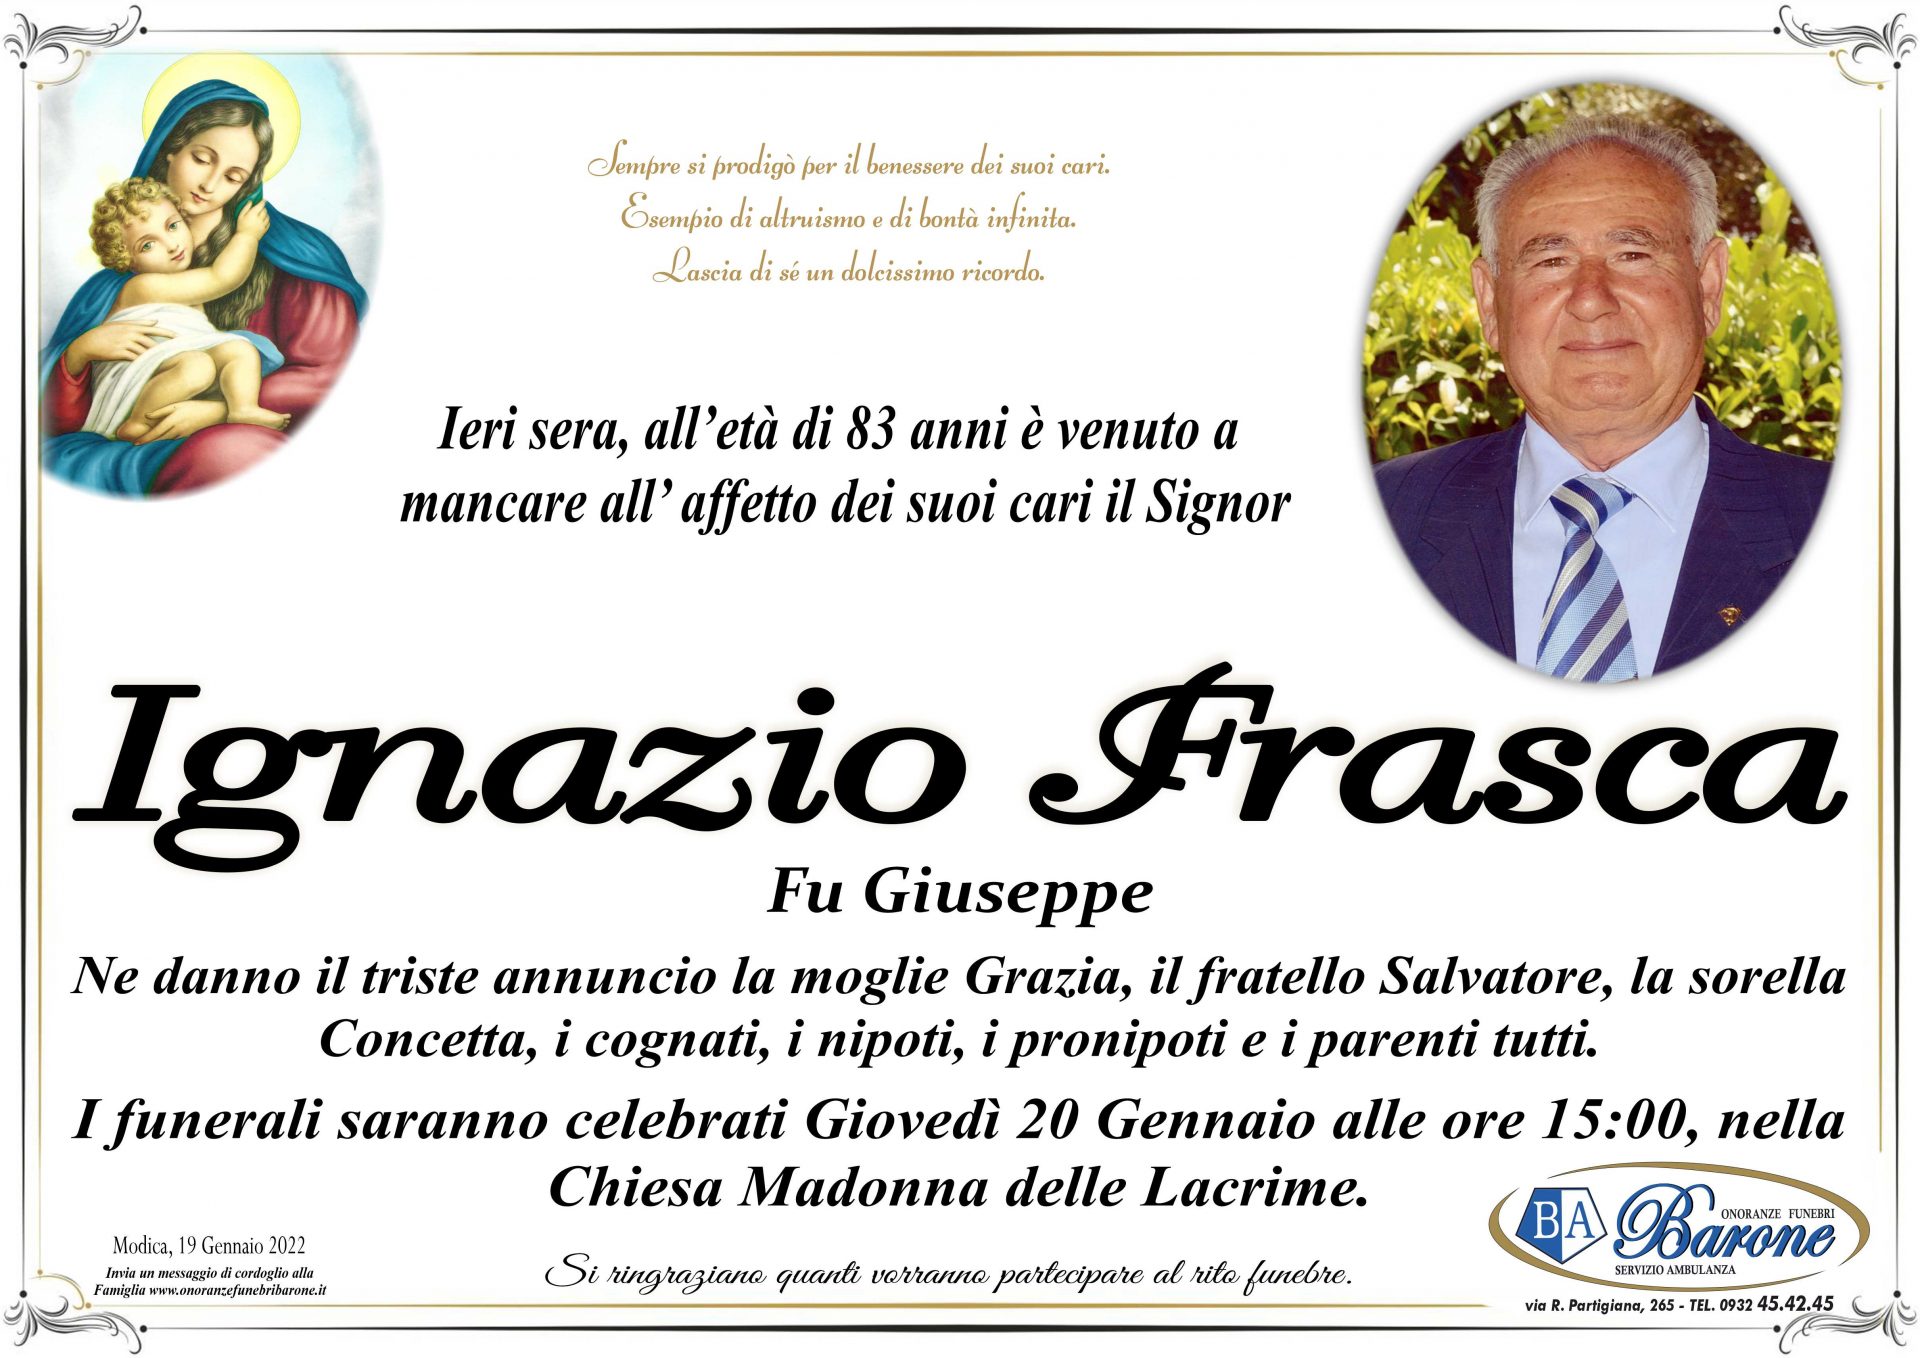 Ignazio Frasca